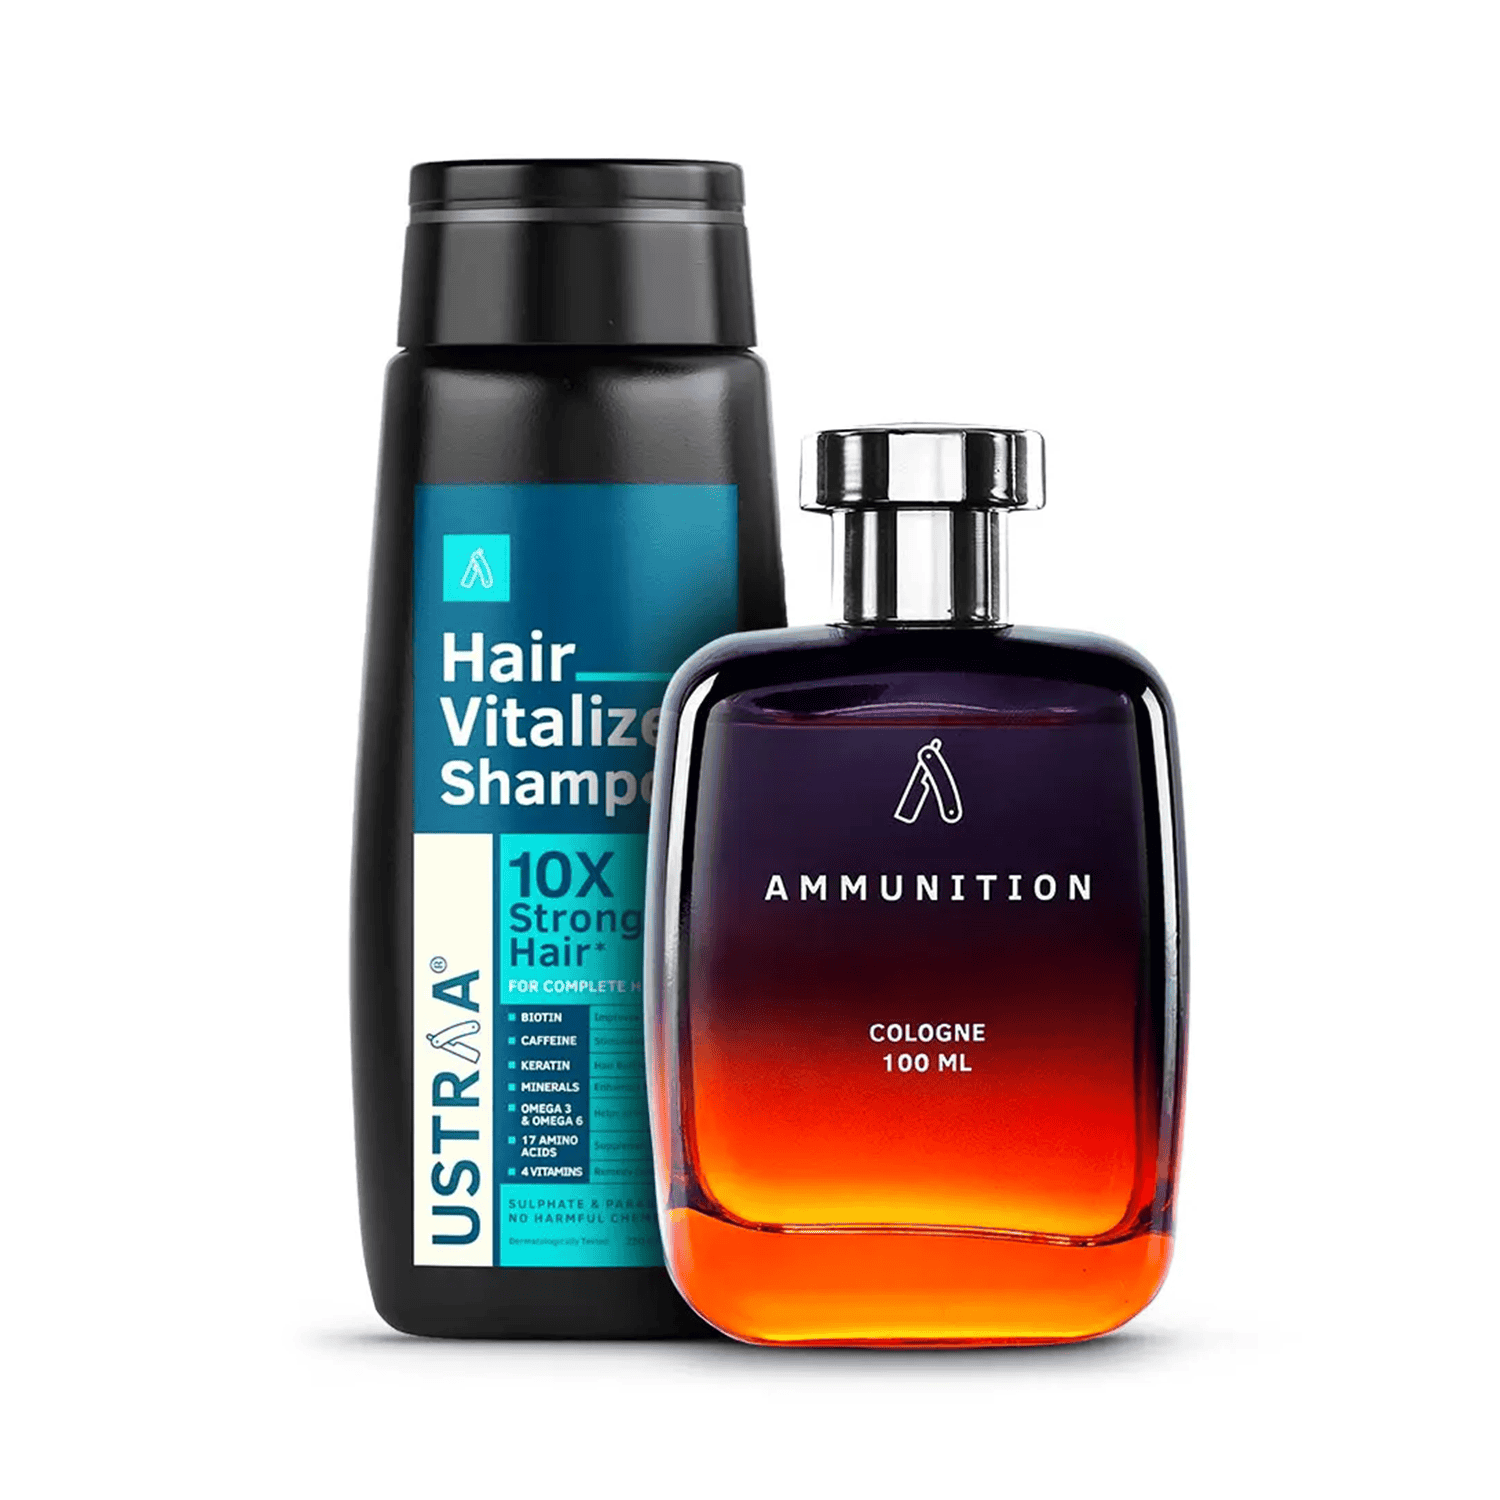 Ustraa | Ustraa Hair Vitalizer Shampoo & Ammunition Cologne Combo